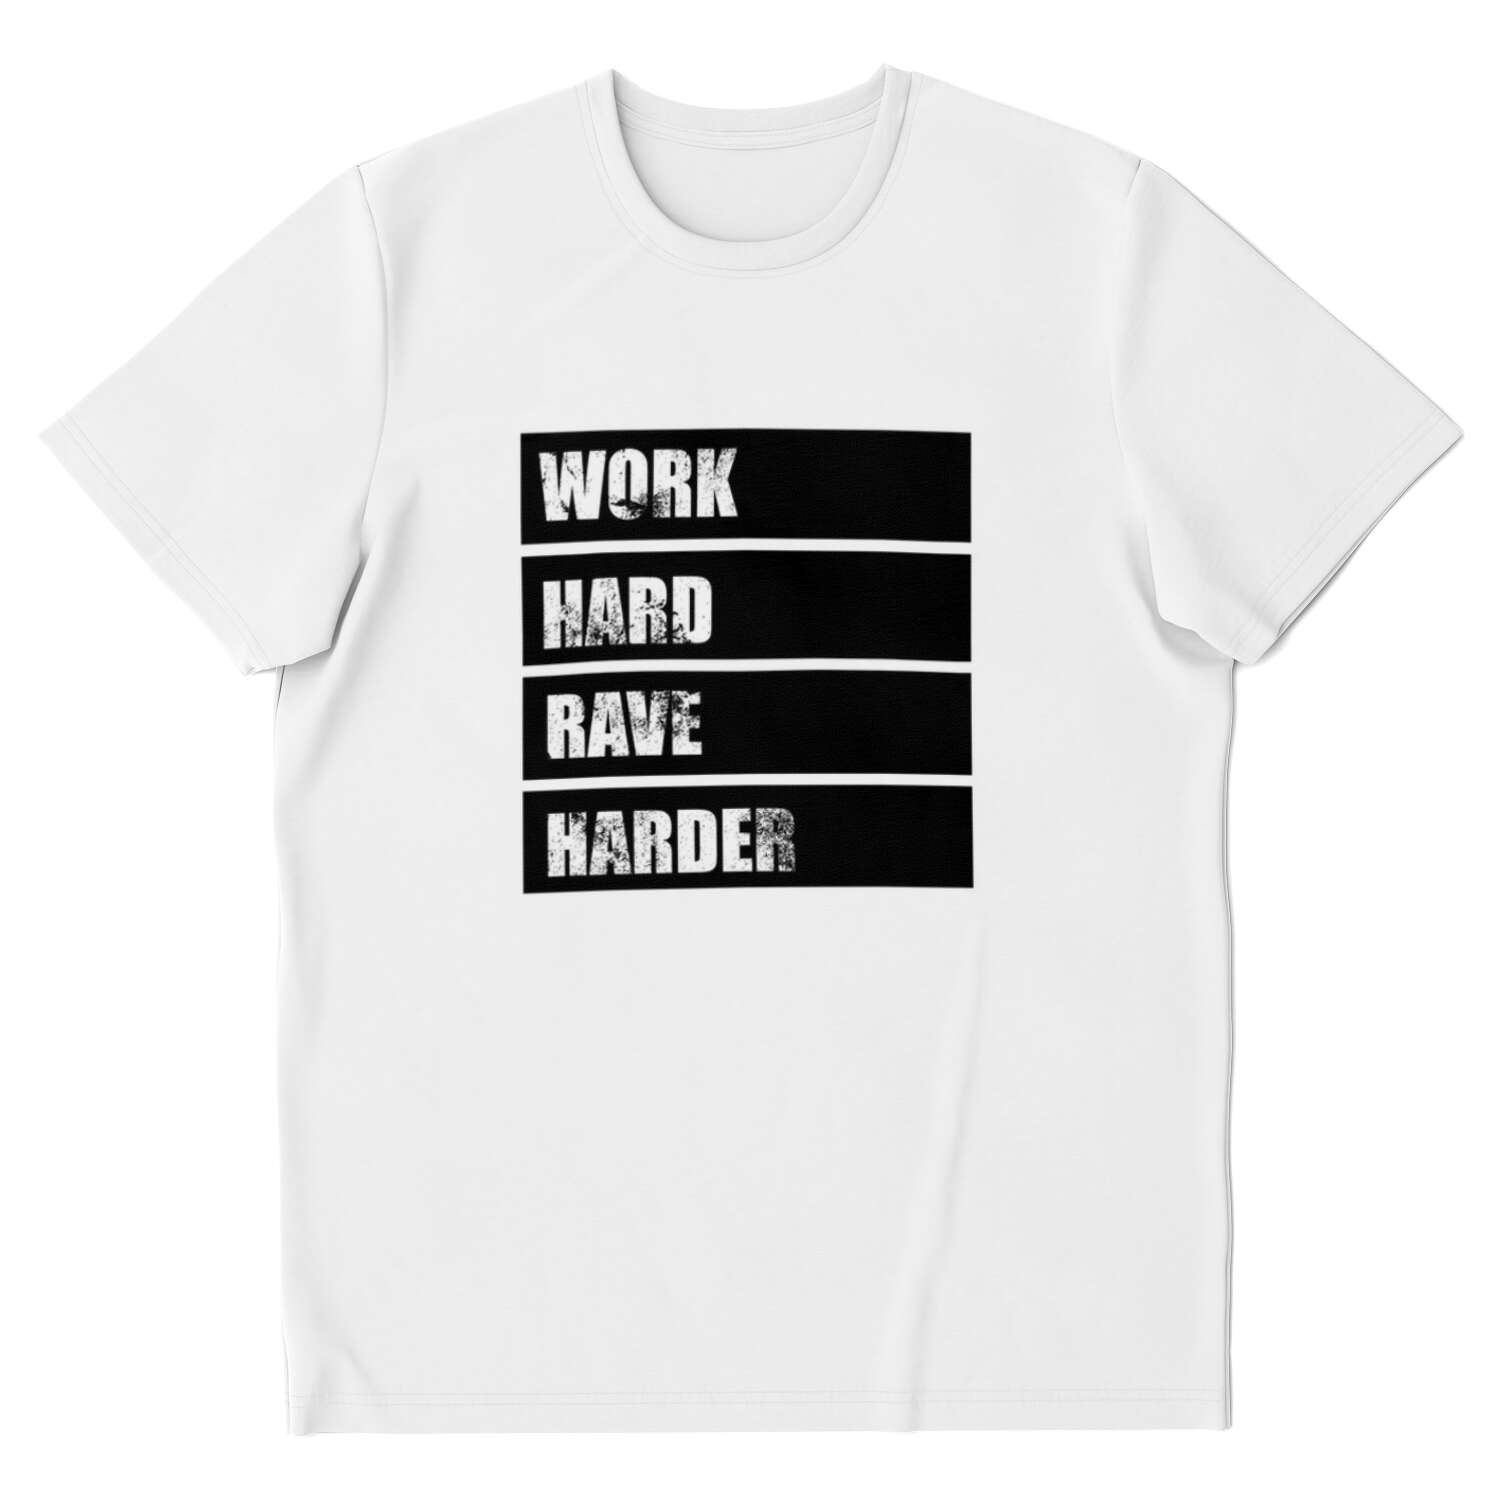 Work hard rave harder T-shirt